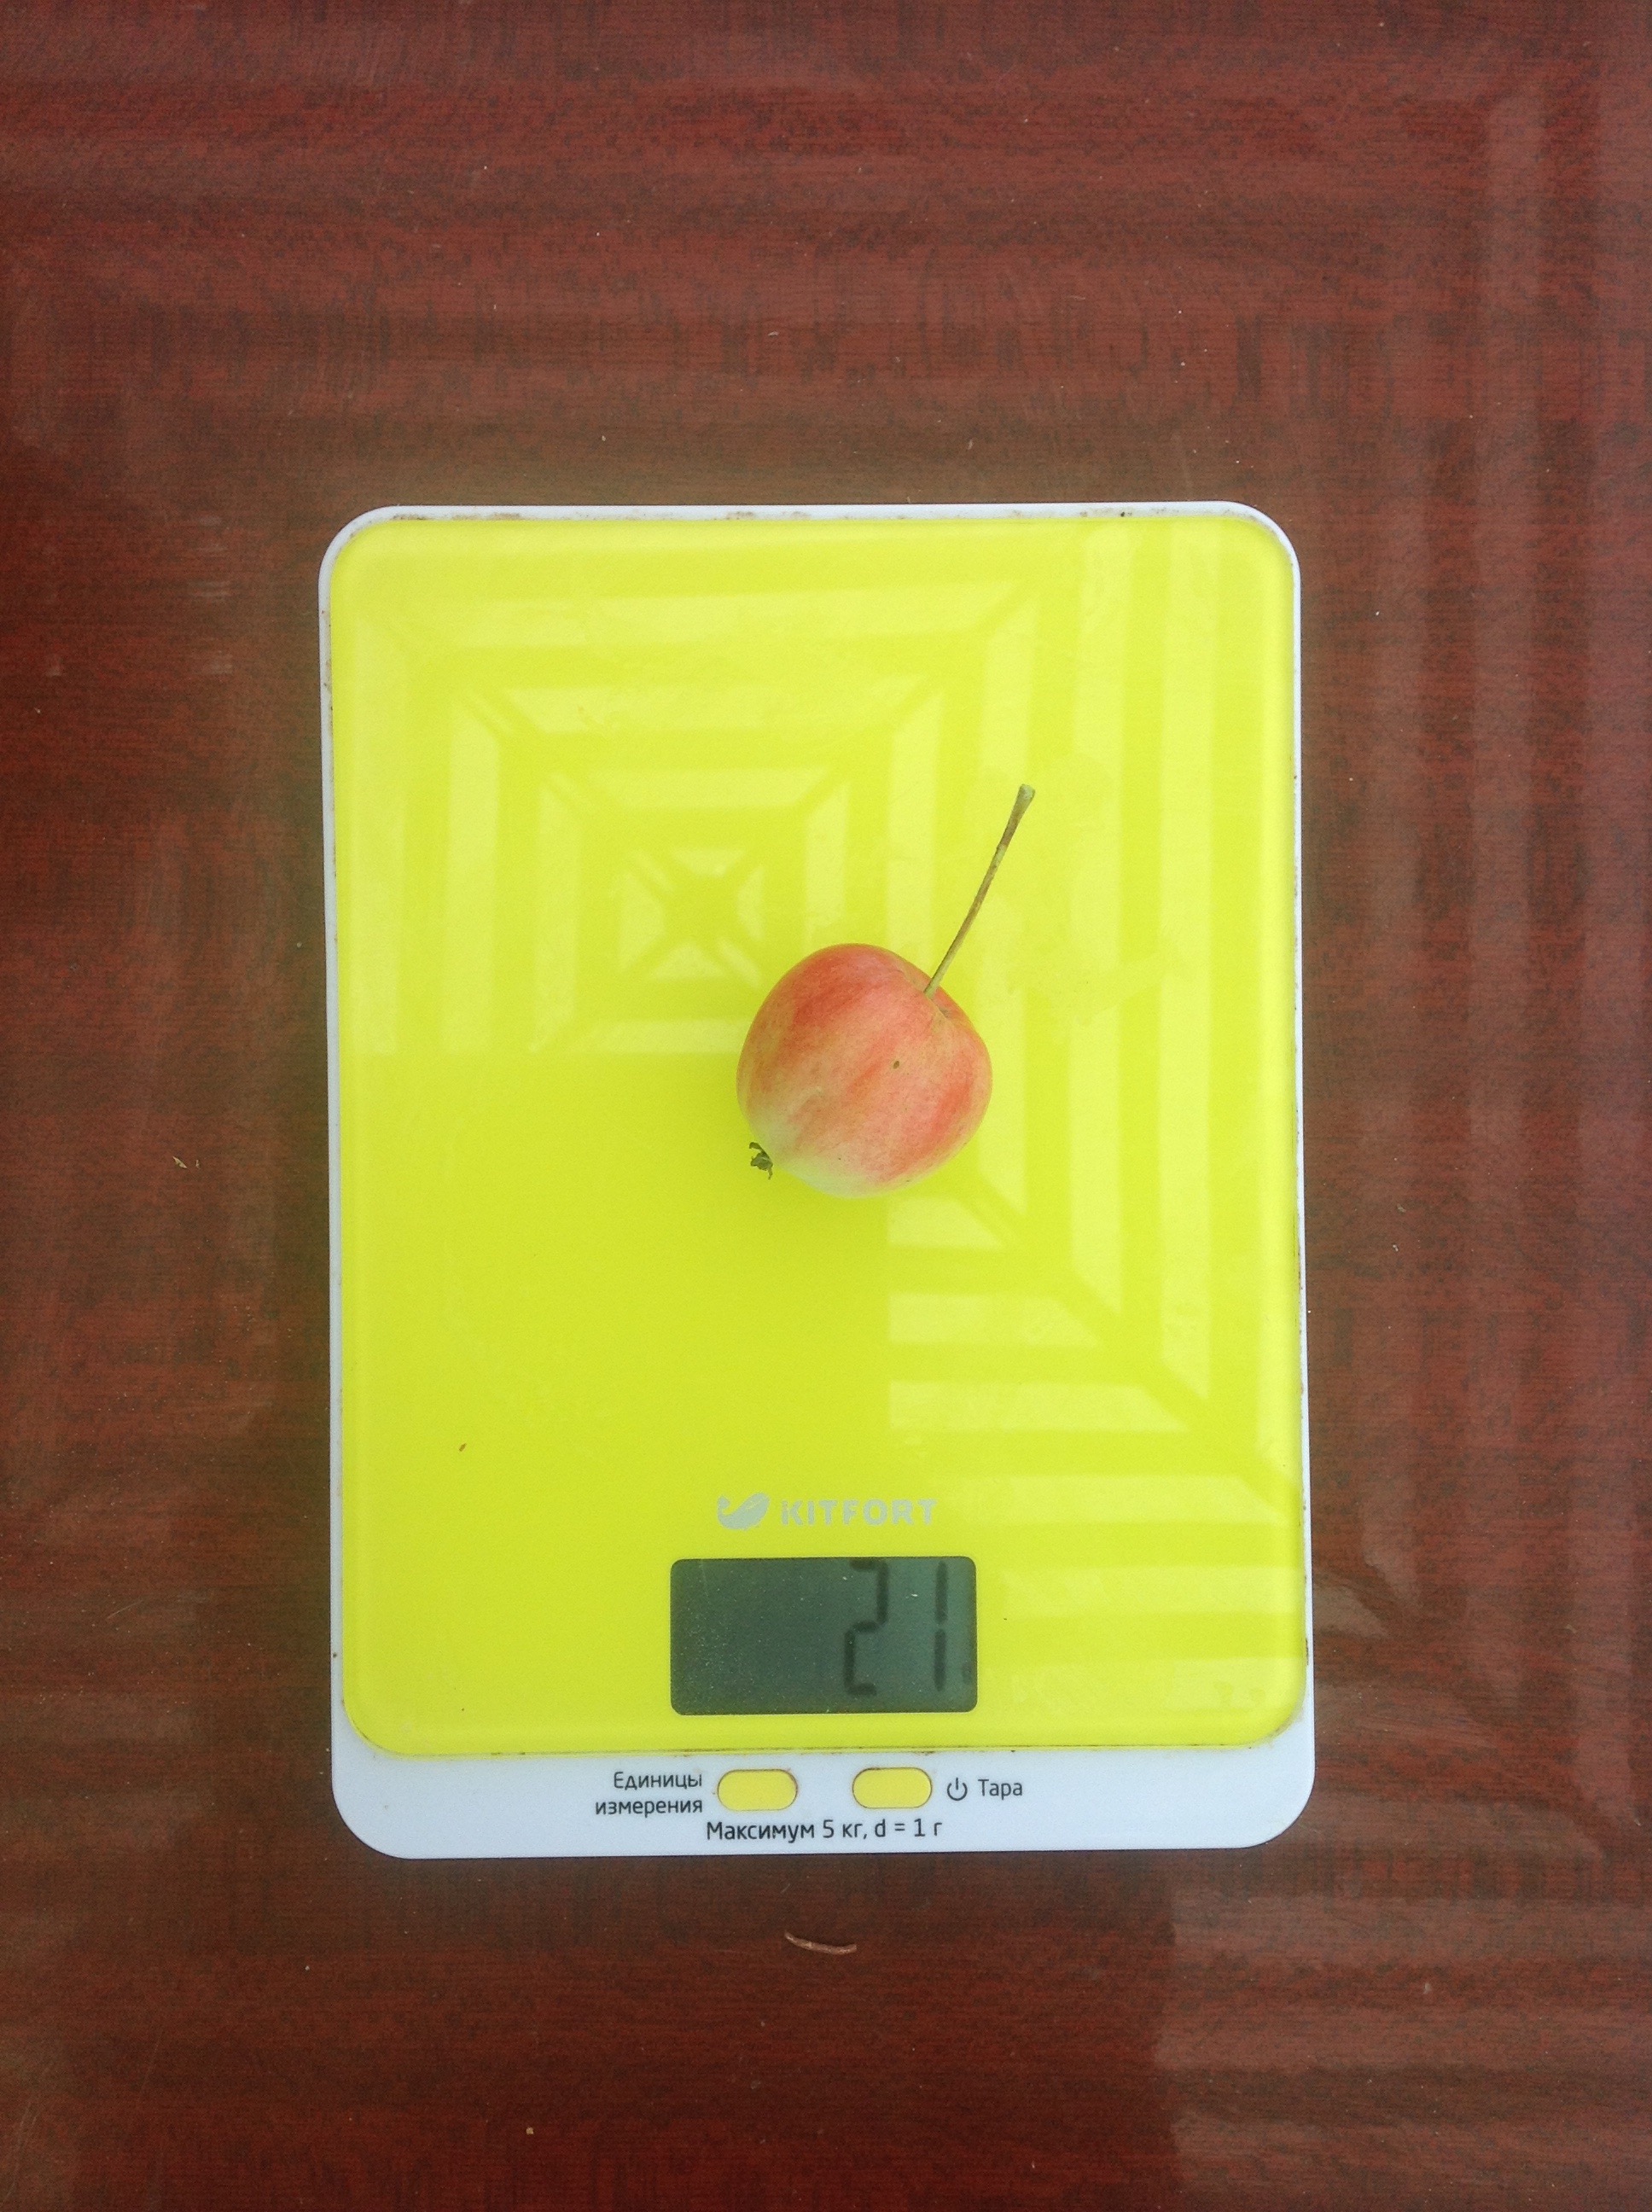 maza dārza ābola svars